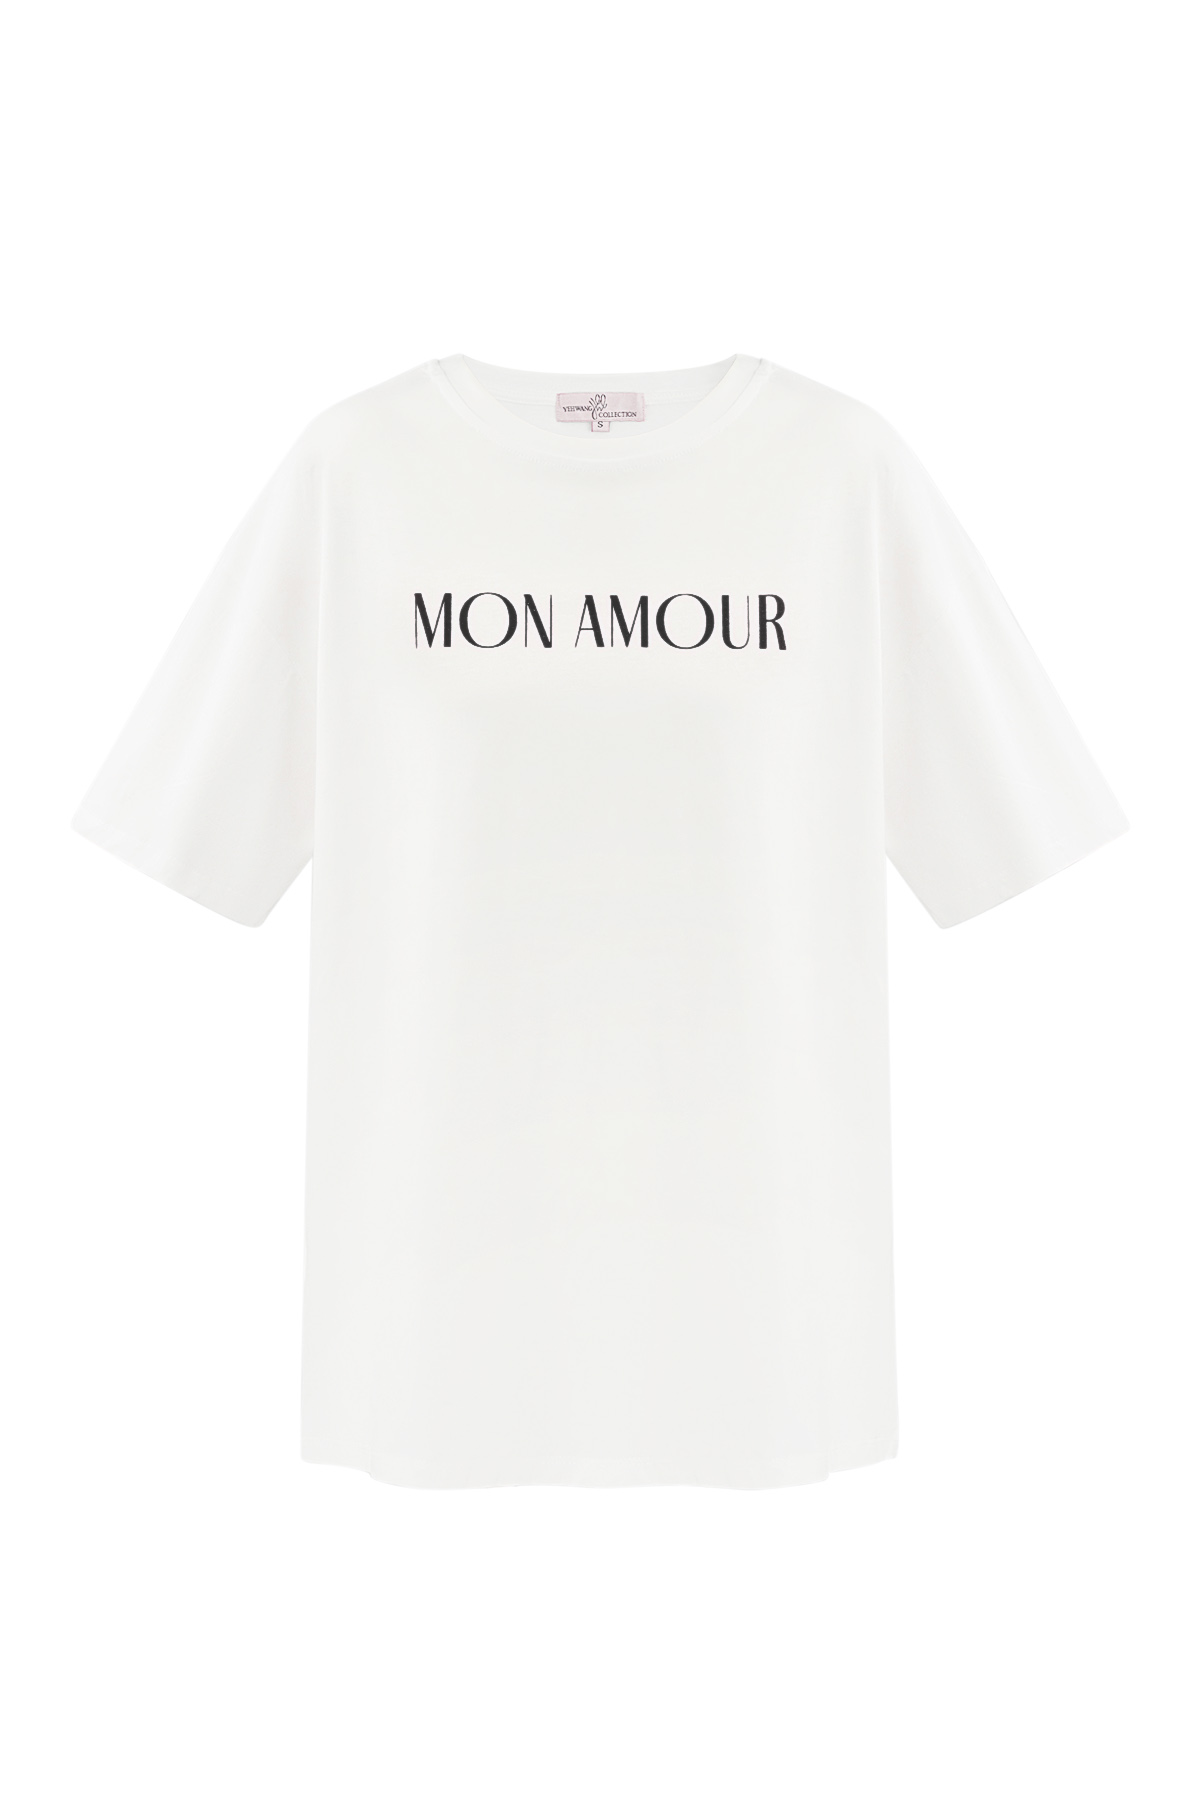 T-shirt mon amour - bianca e nera h5 